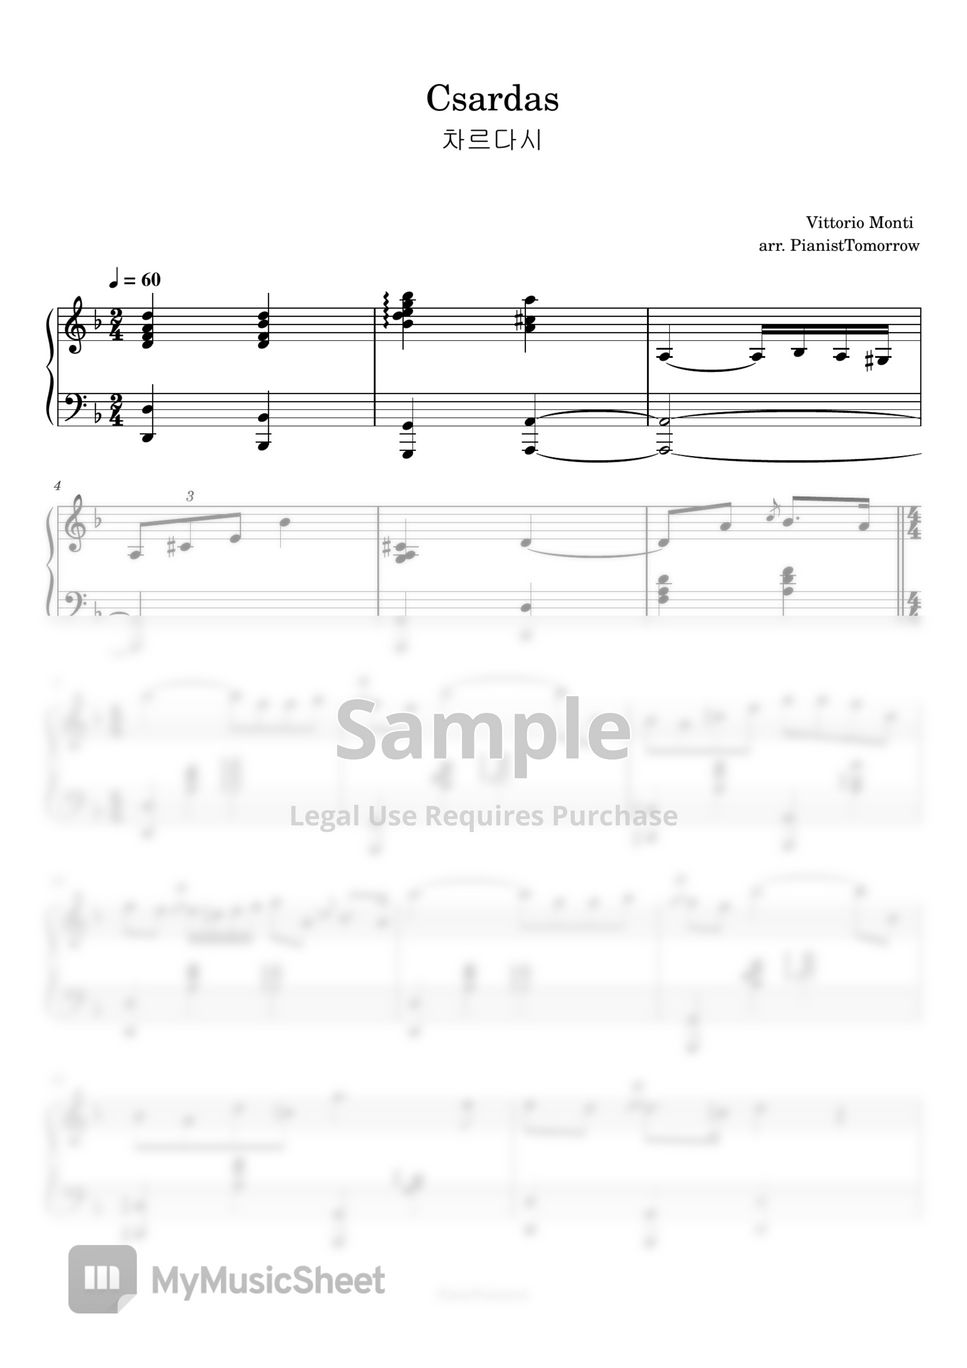 V. Monti - Czardas (Piano version) by PianistTomorrow